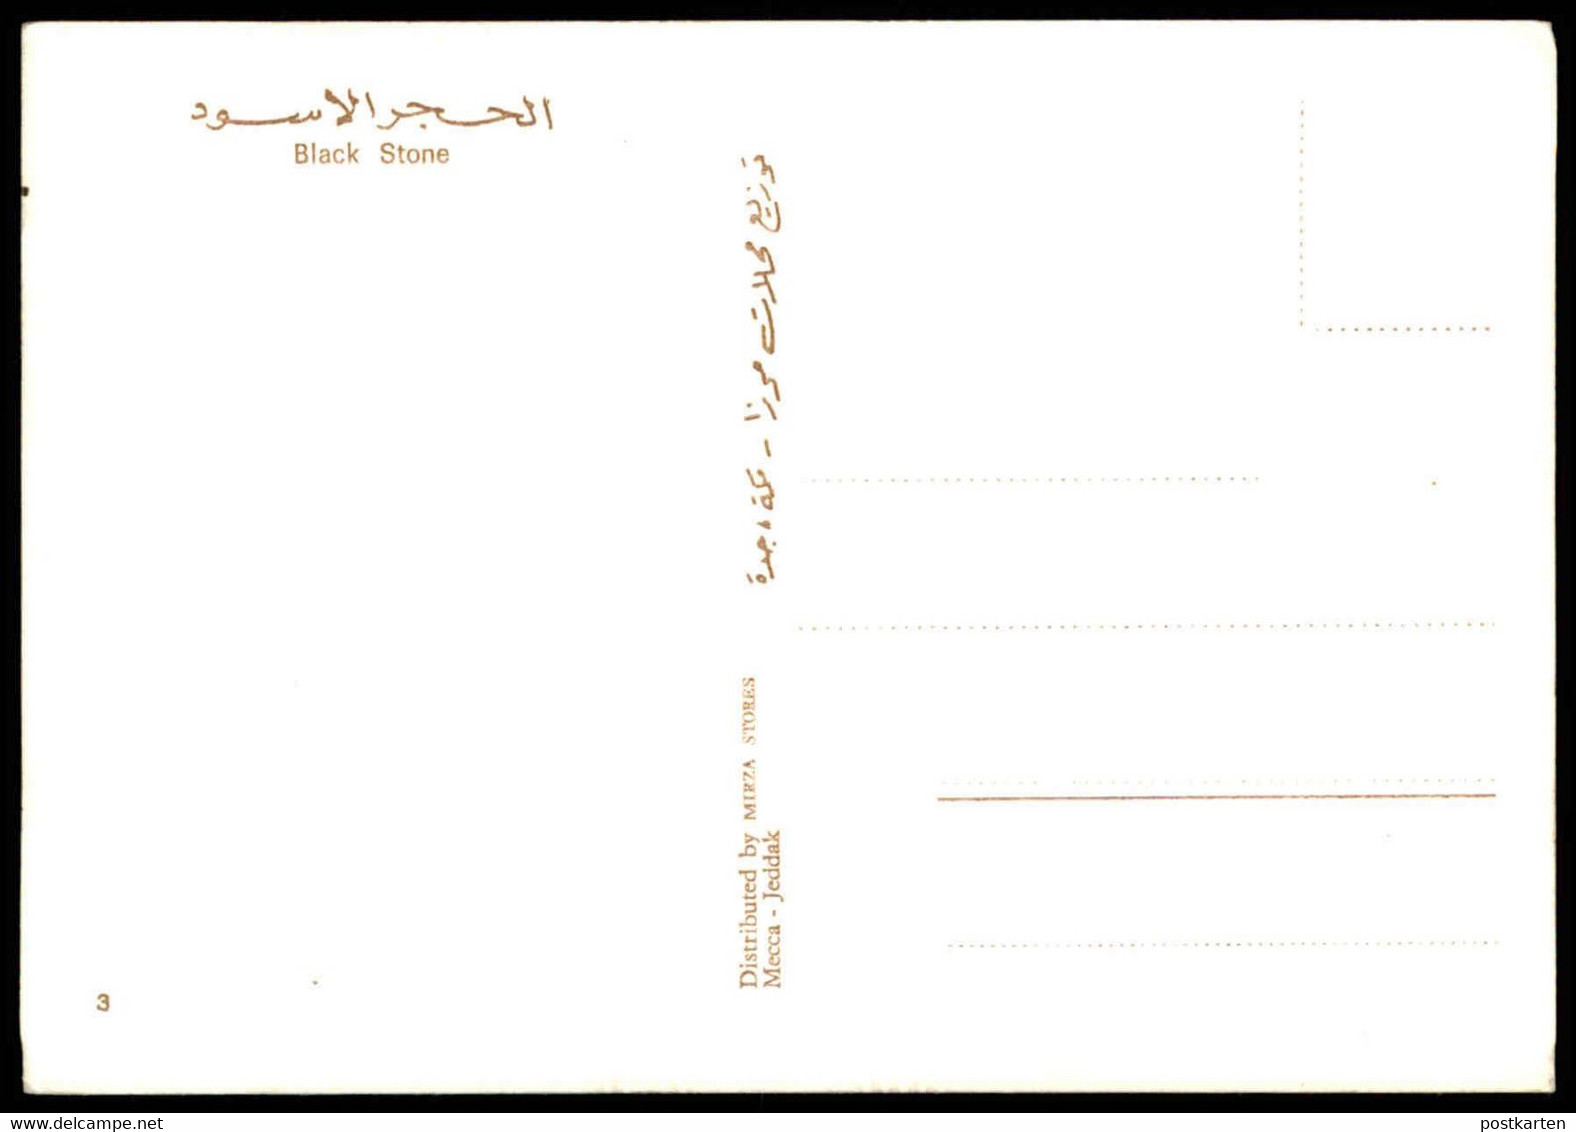 ÄLTERE KARTE MECCA HADDSCH BLACK STONE KAABA Mekka Saudi Arabien Saudi Arabia Pilger Cpa Ansichtskarte Postcard AK - Saudi Arabia